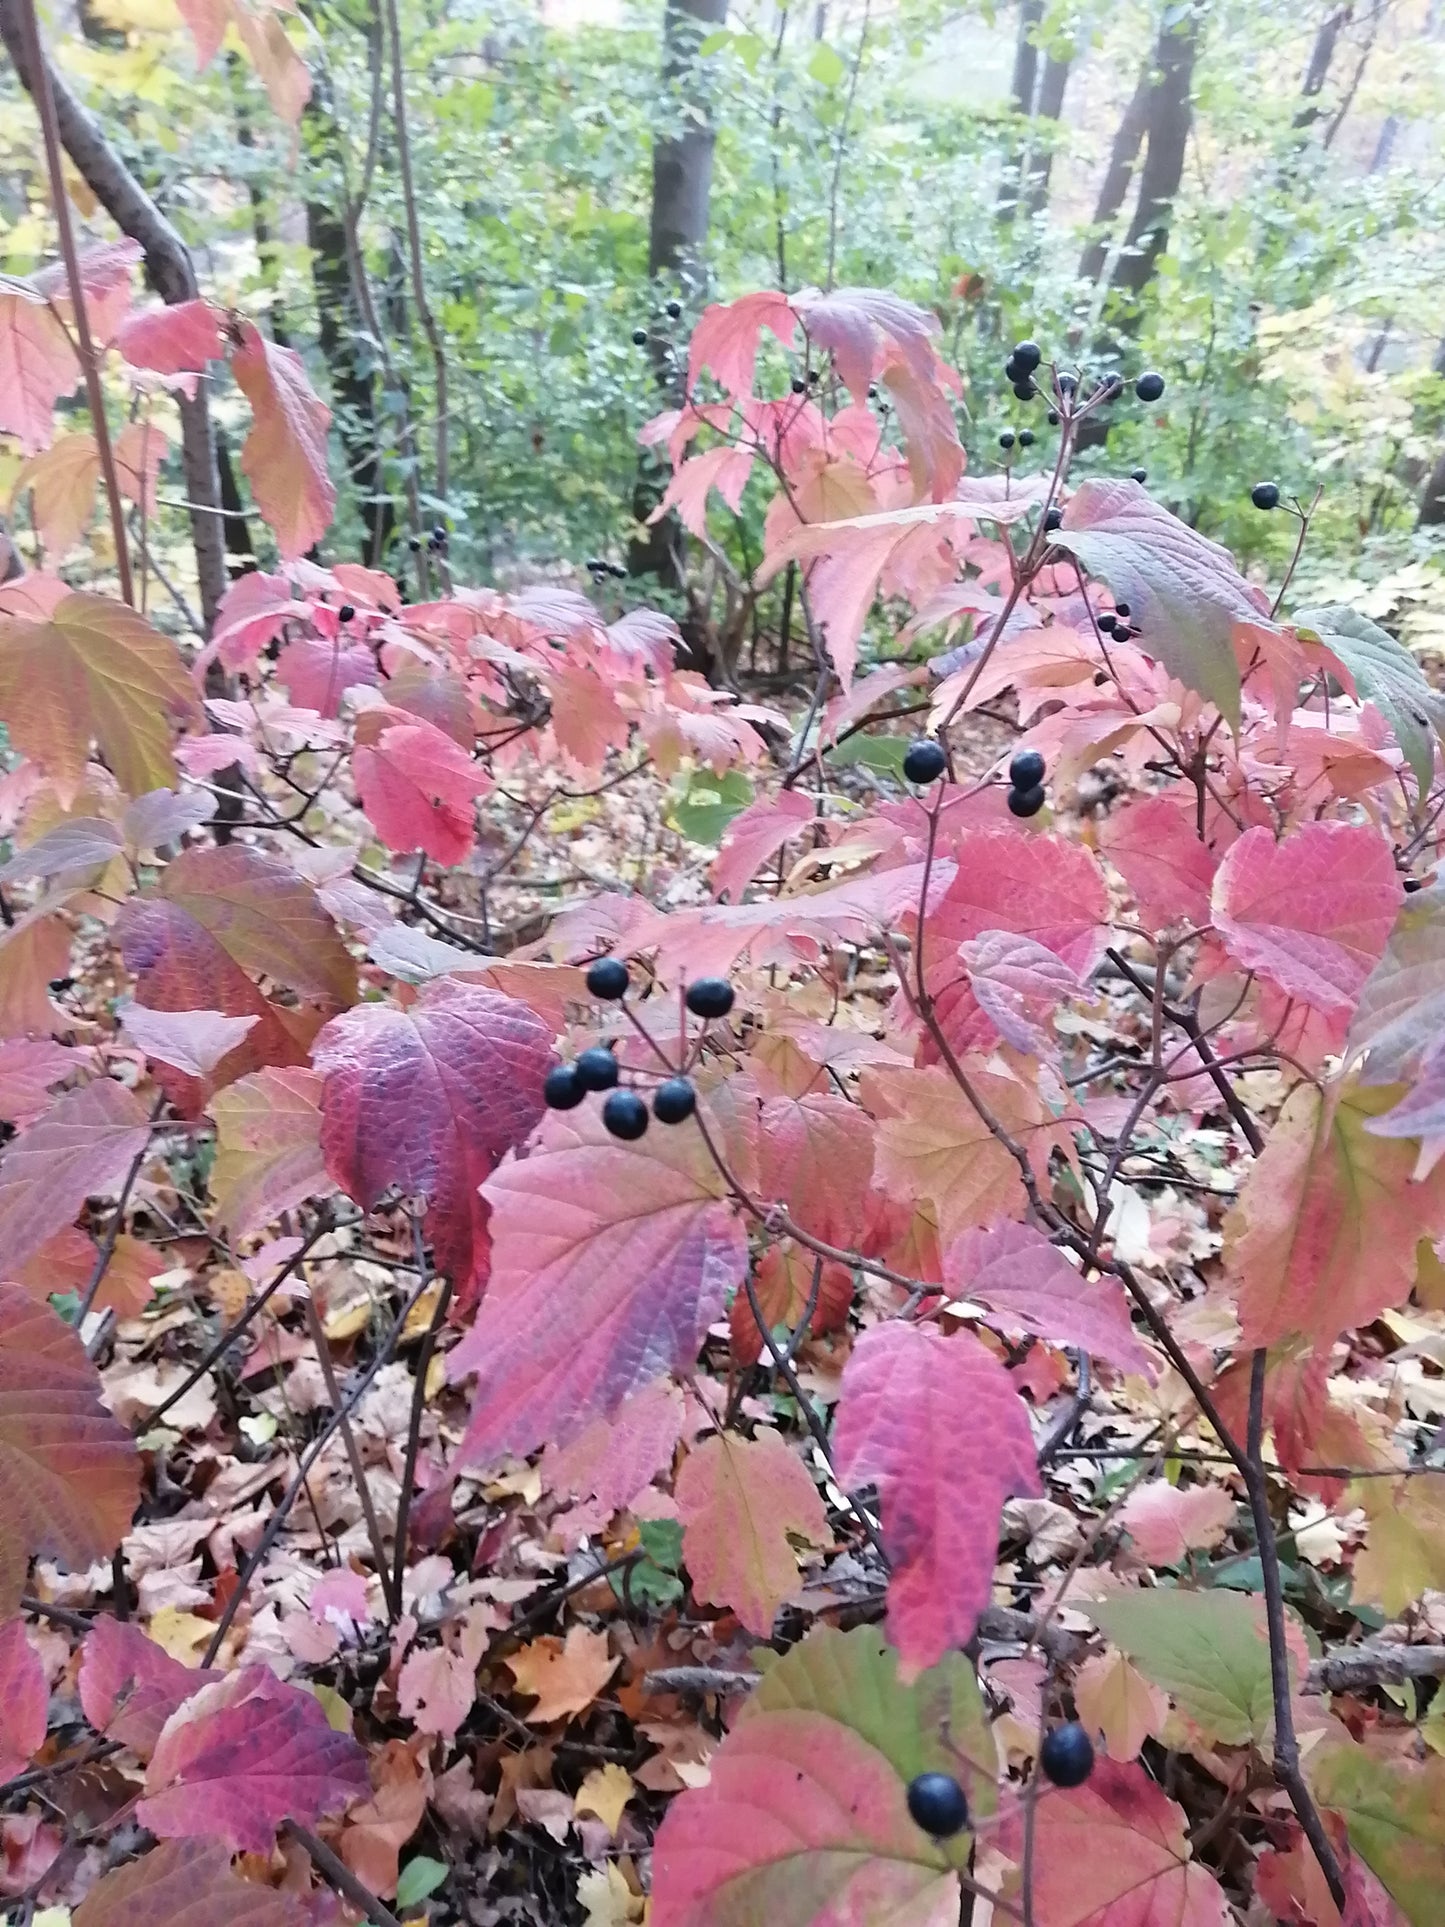 Hundredfold Mapleleaf Viburnum 5 Seeds – Viburnum acerifolium Maple-Leaf Arrowwood, Canada Native Shrub